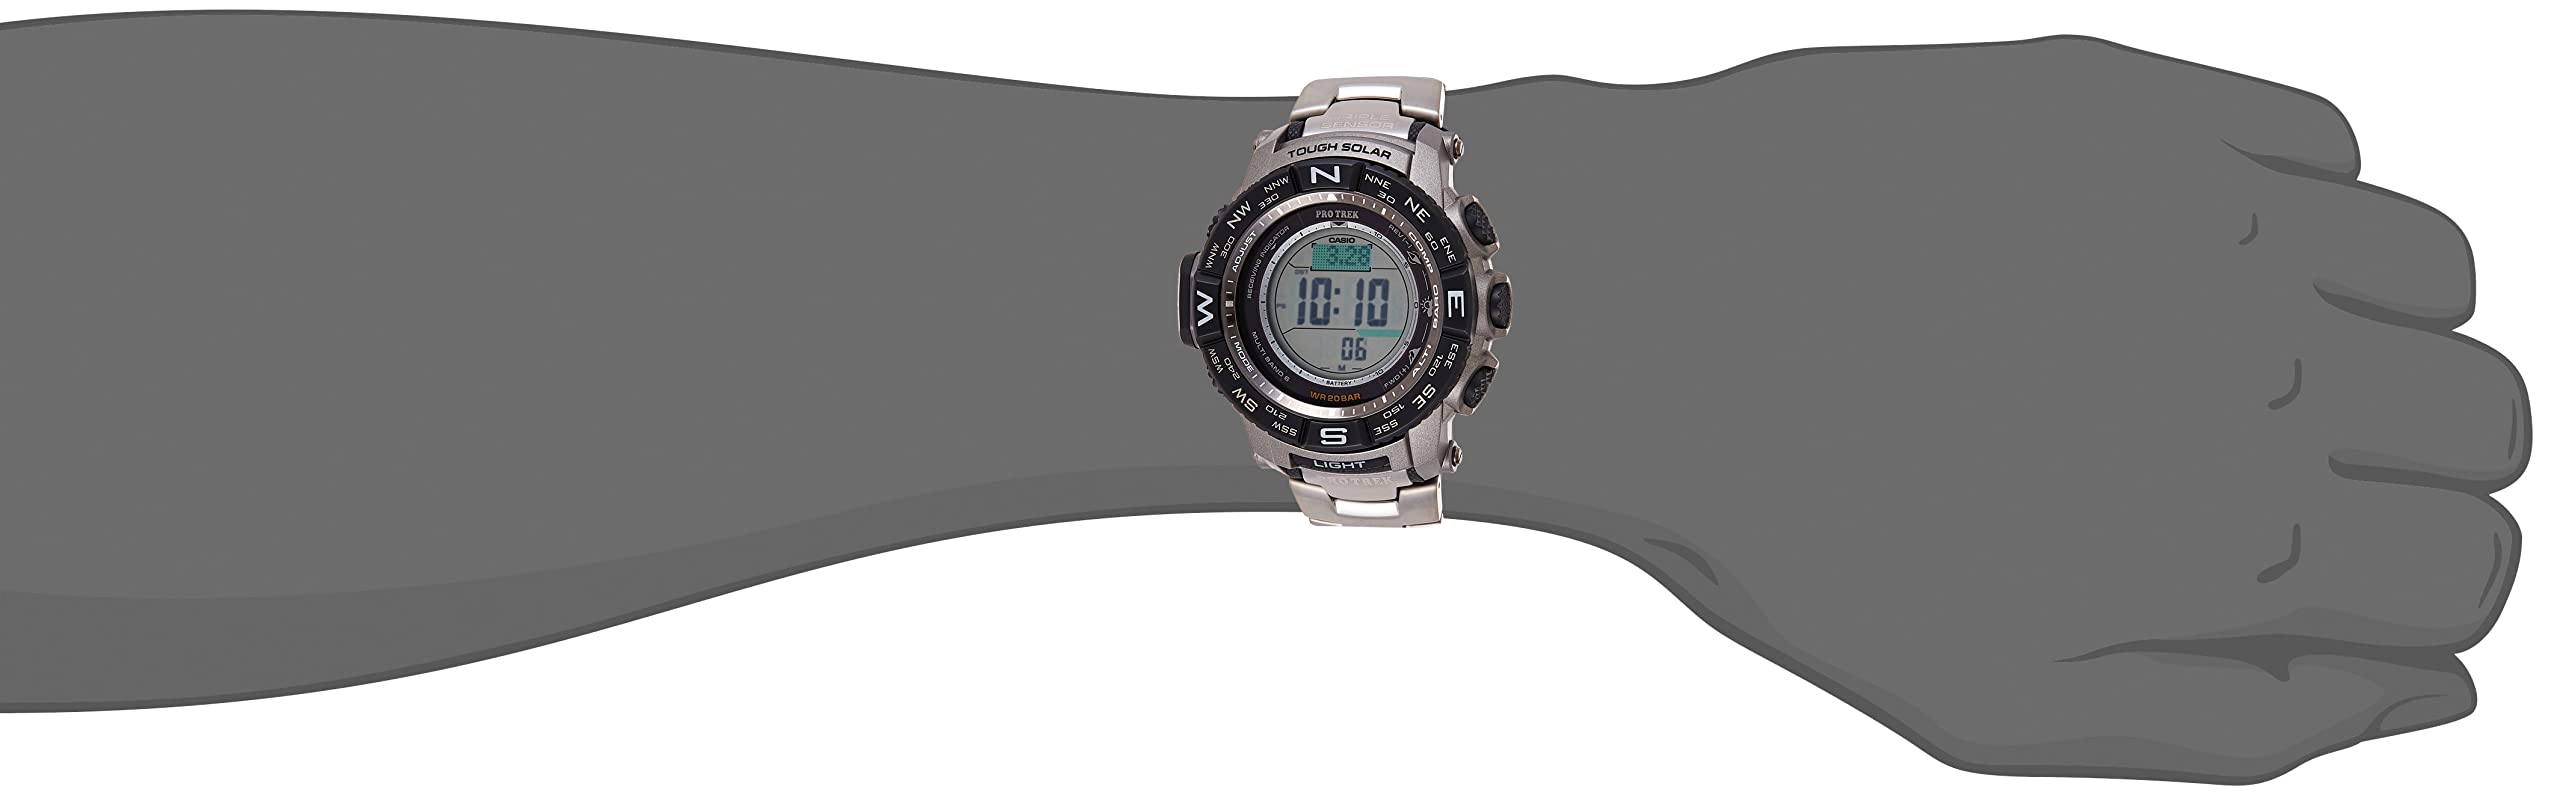 Casio Men's Pro Trek PRW-3500T-7CR Tough Solar Triple Sensor Digital Sport Watch